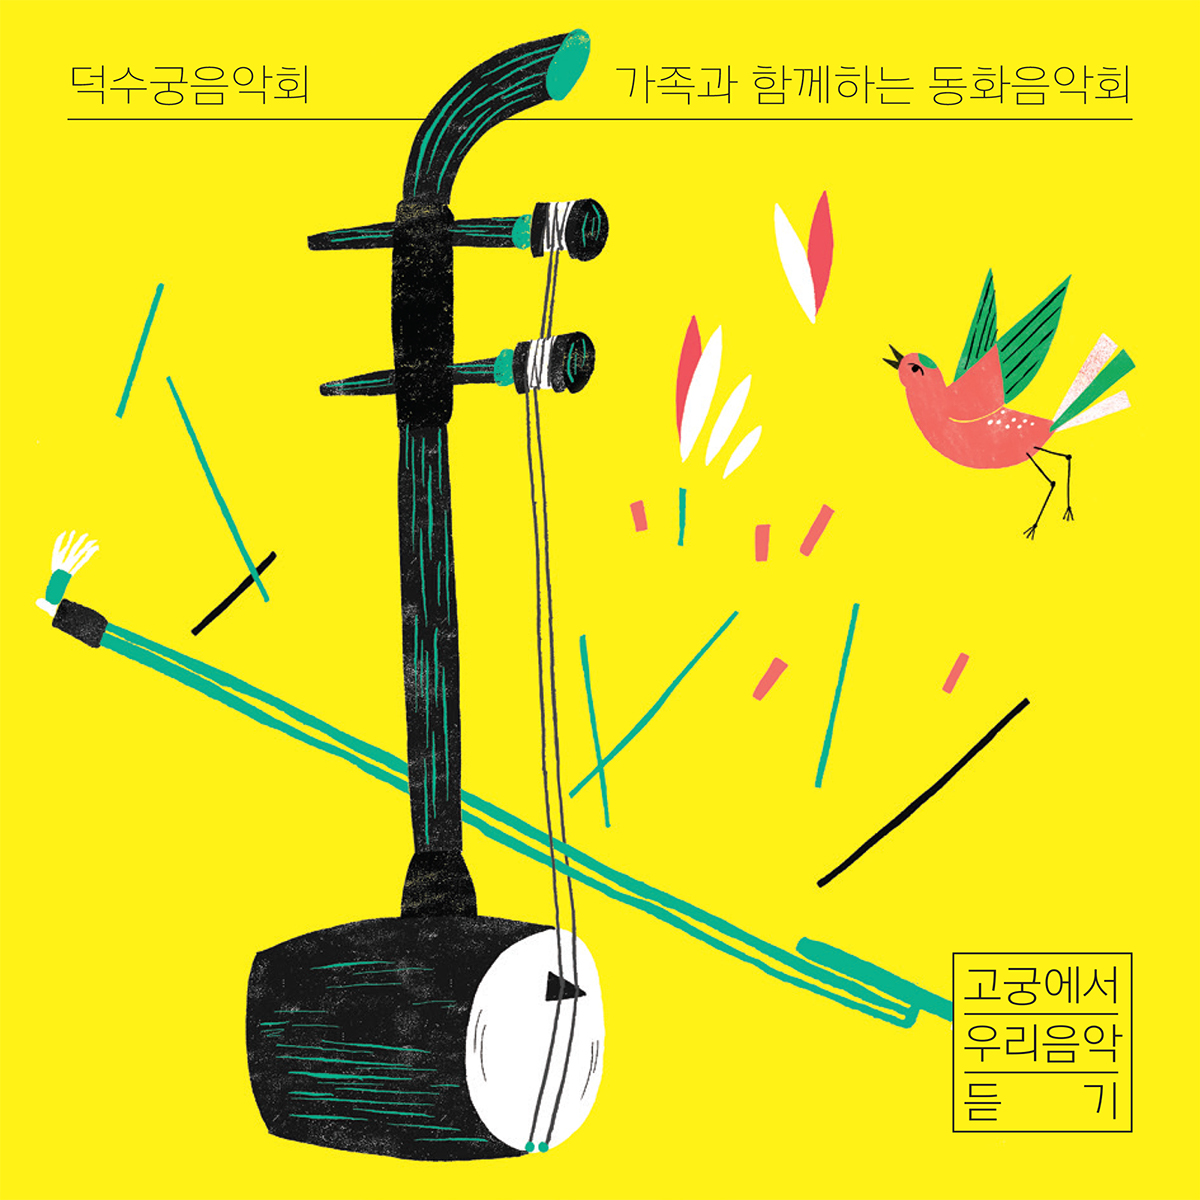 seoul Korea traditional music festival instrument asian performing arts ancient palace Kyungbok Palace gayagum festival poster